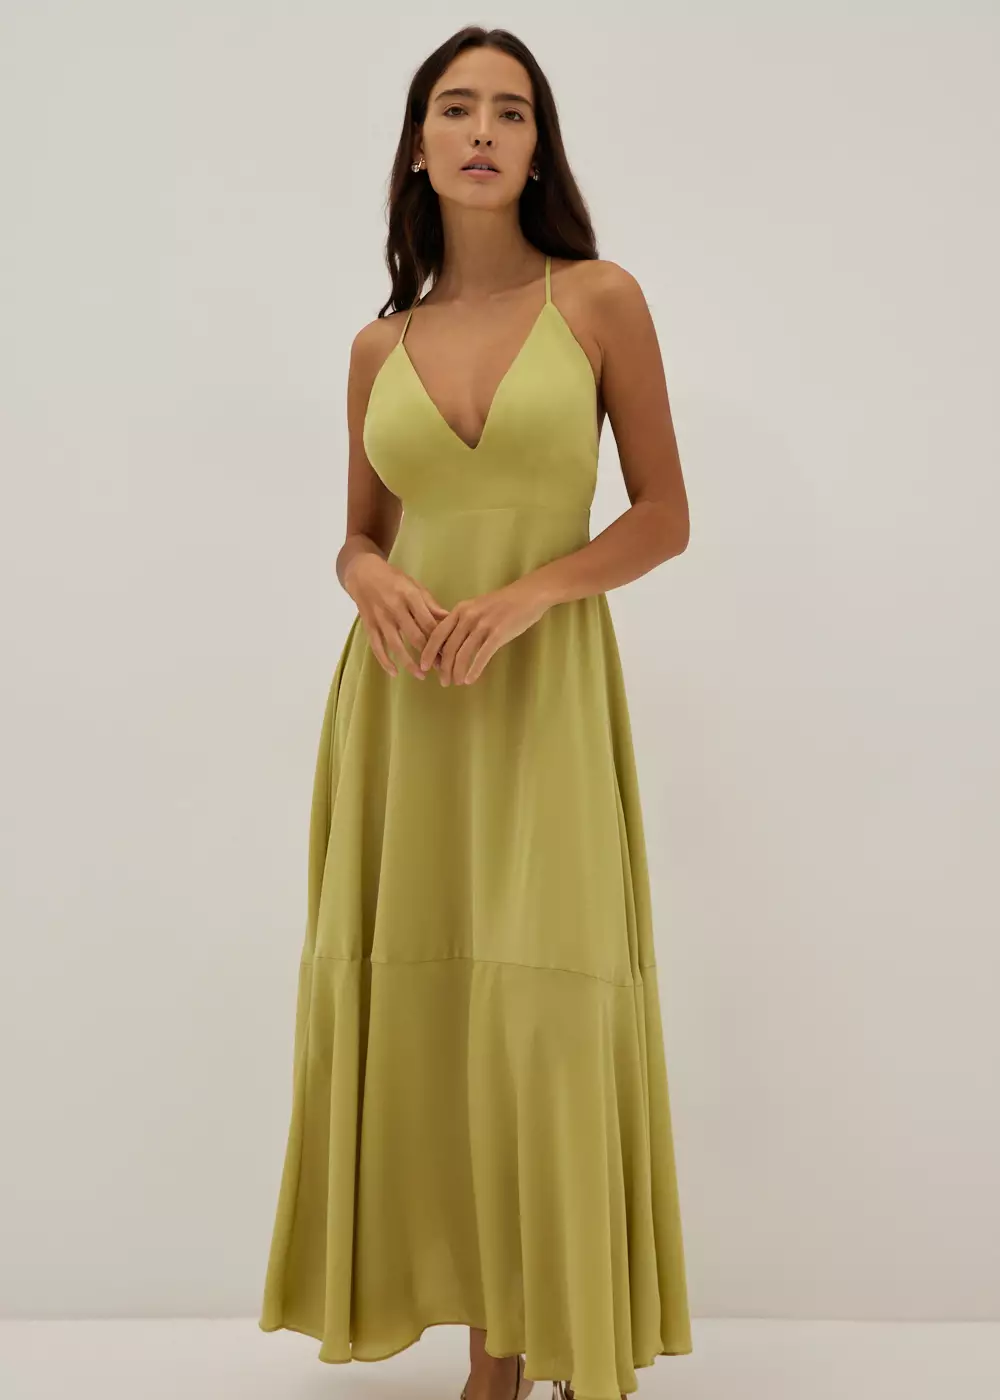 Buy Layton Padded Plunge Dress @ Love, Bonito, Shop Women's Fashion Online